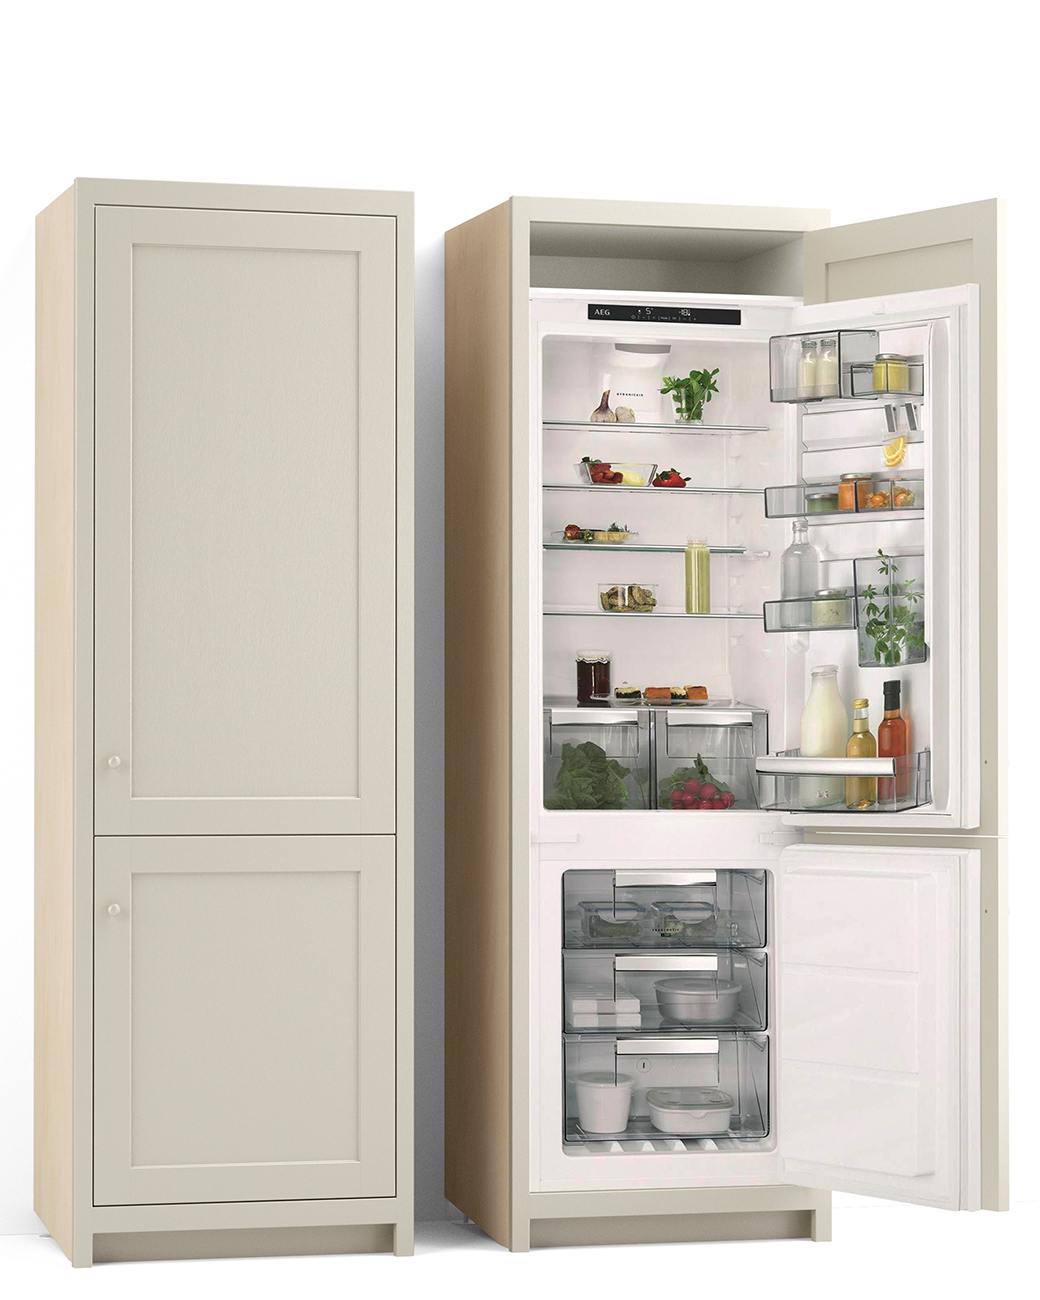 Integrated Fridge / Freezer Housing, Kitchen Units